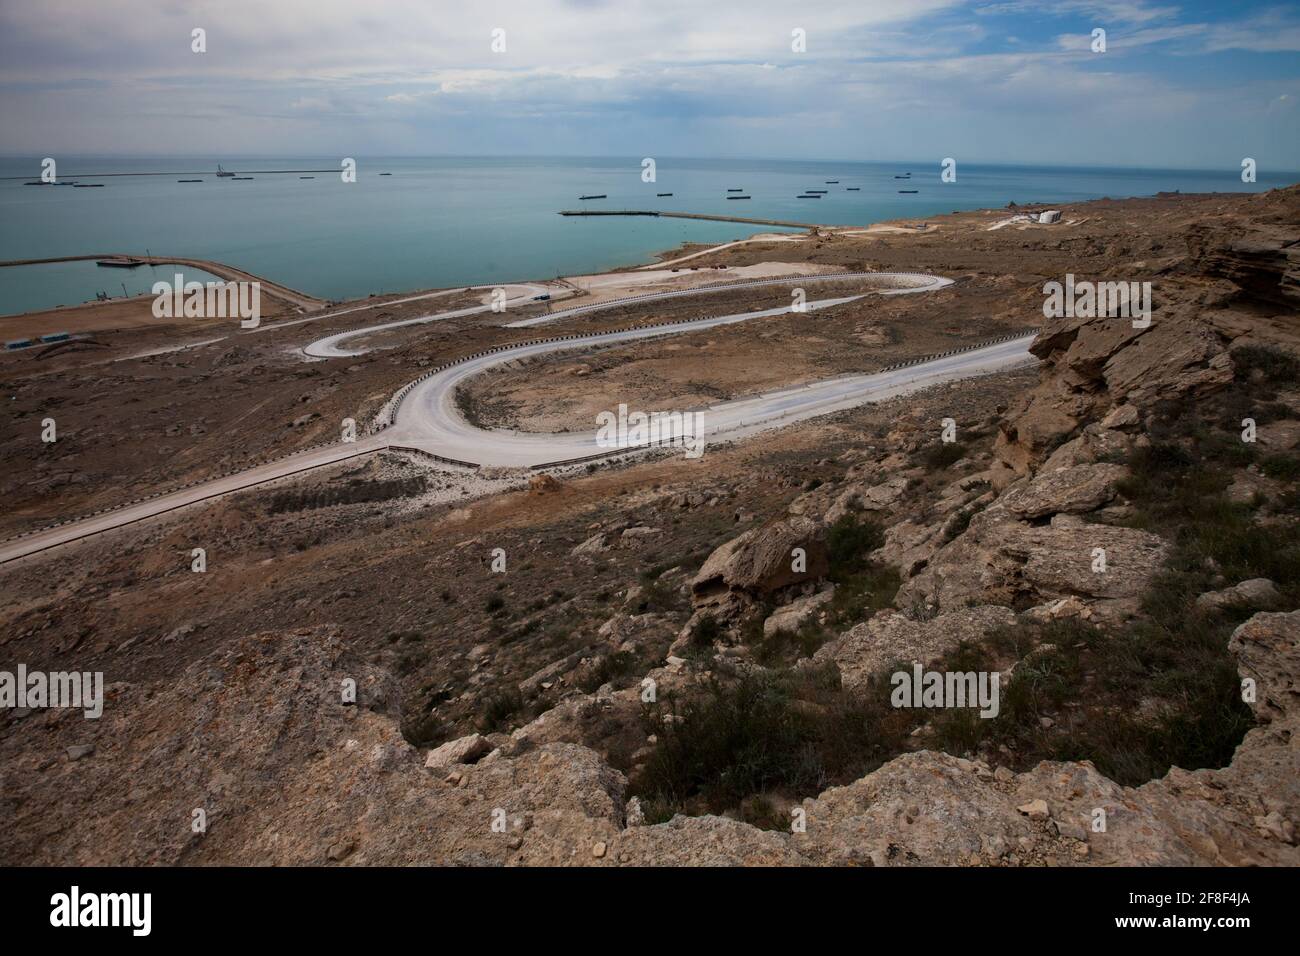 Bautino bay, Mangystau, Caspian sea, Kazakhstan. White serpentine road down to sea and oil loading terminal. Tanker ships on horizon. Stock Photo